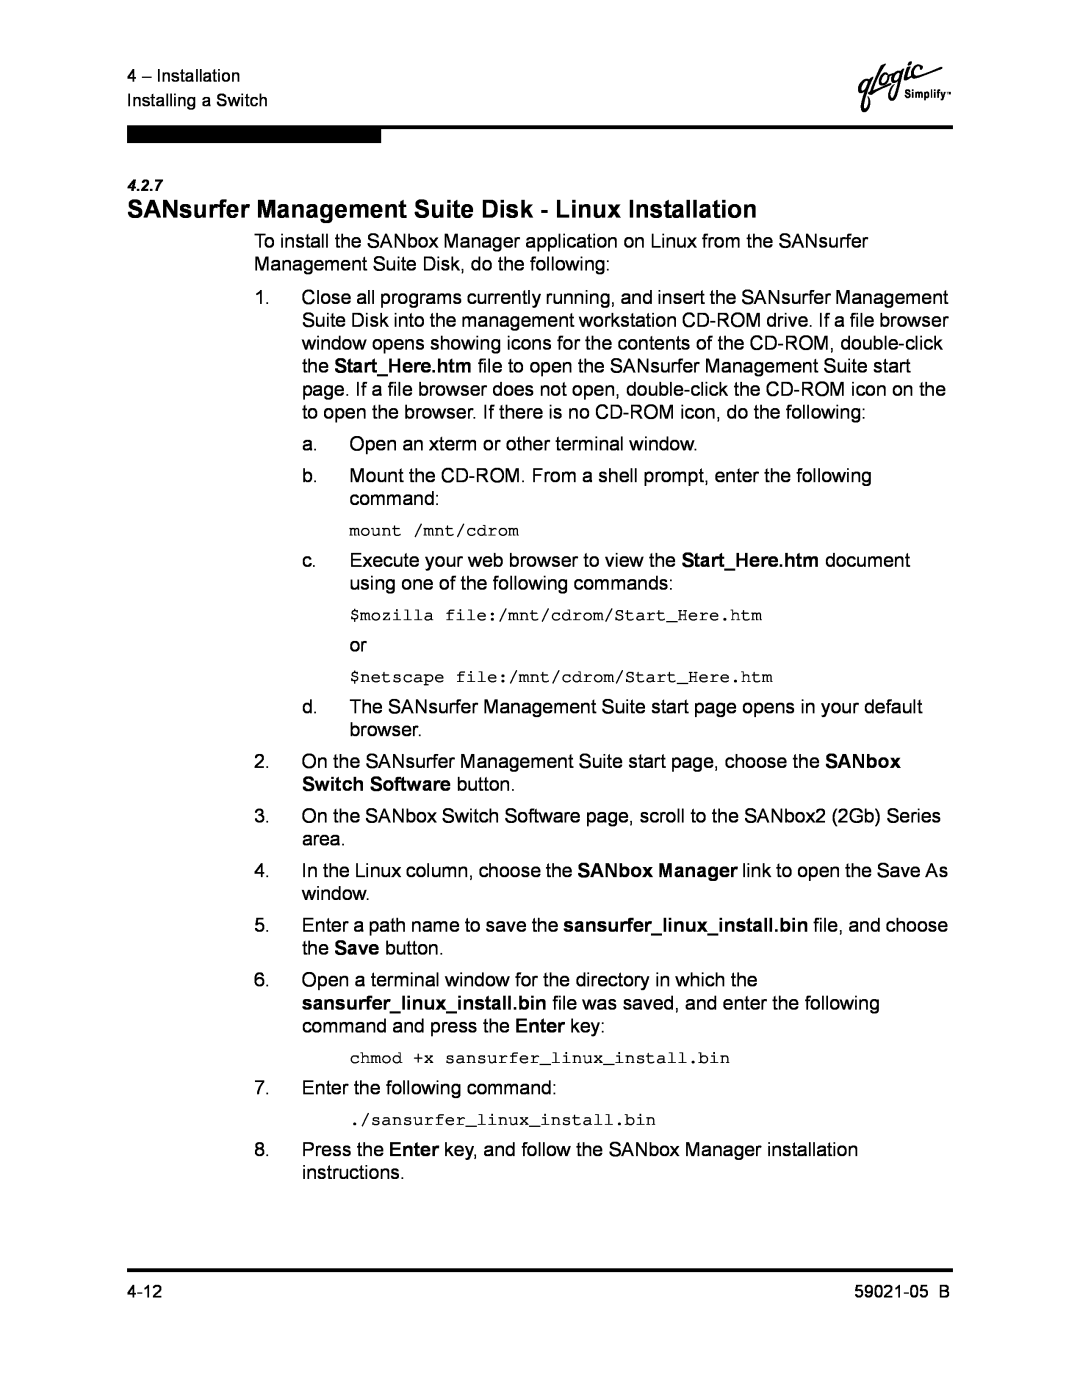 Q-Logic 59021-05 B manual SANsurfer Management Suite Disk - Linux Installation, mount /mnt/cdrom, sansurferlinuxinstall.bin 